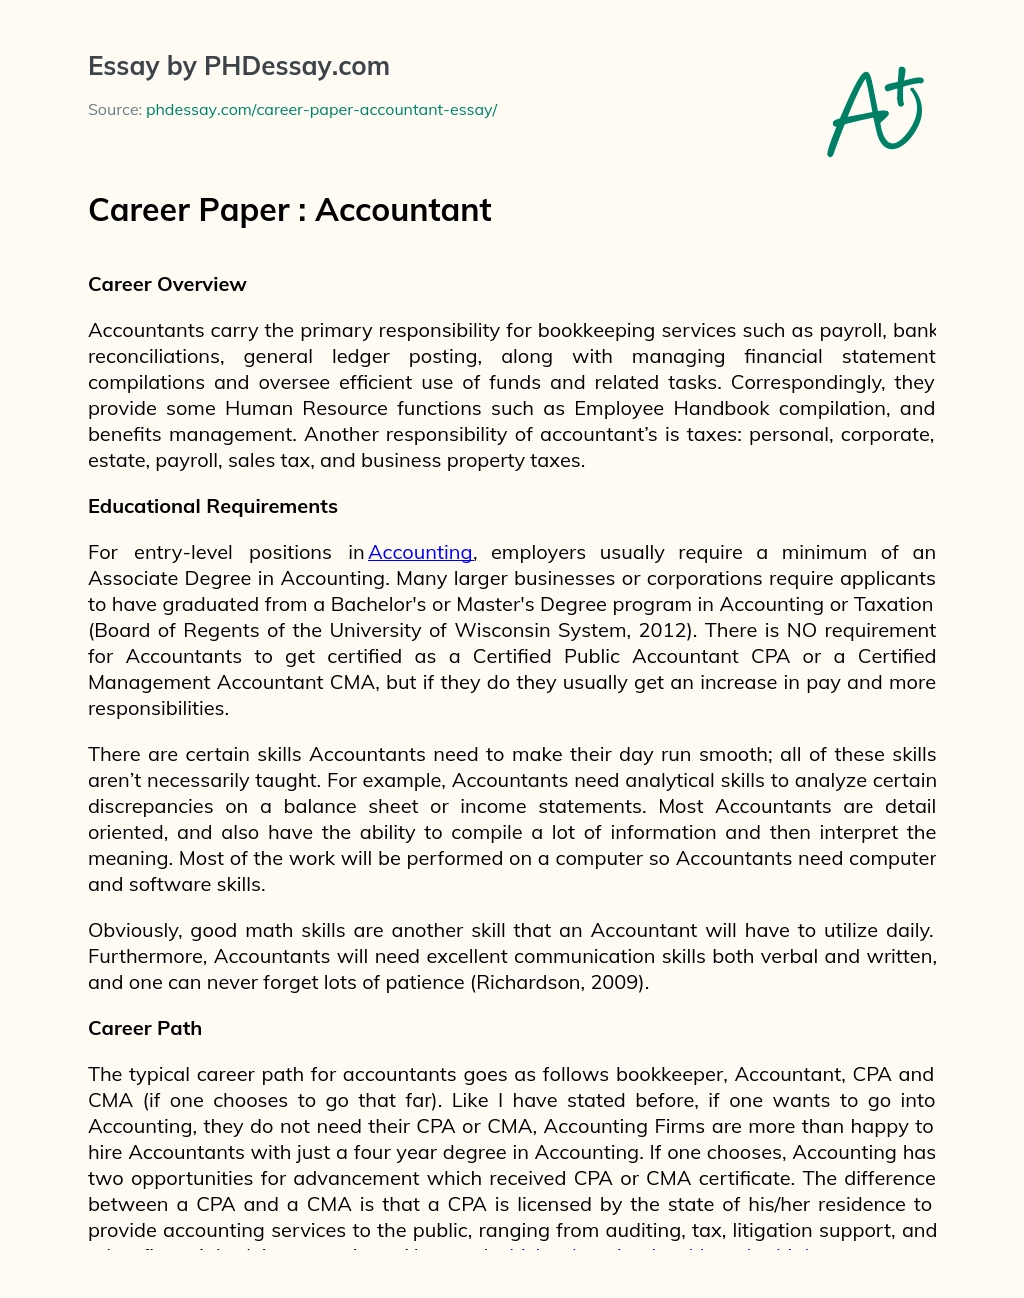 Career Paper : Accountant essay